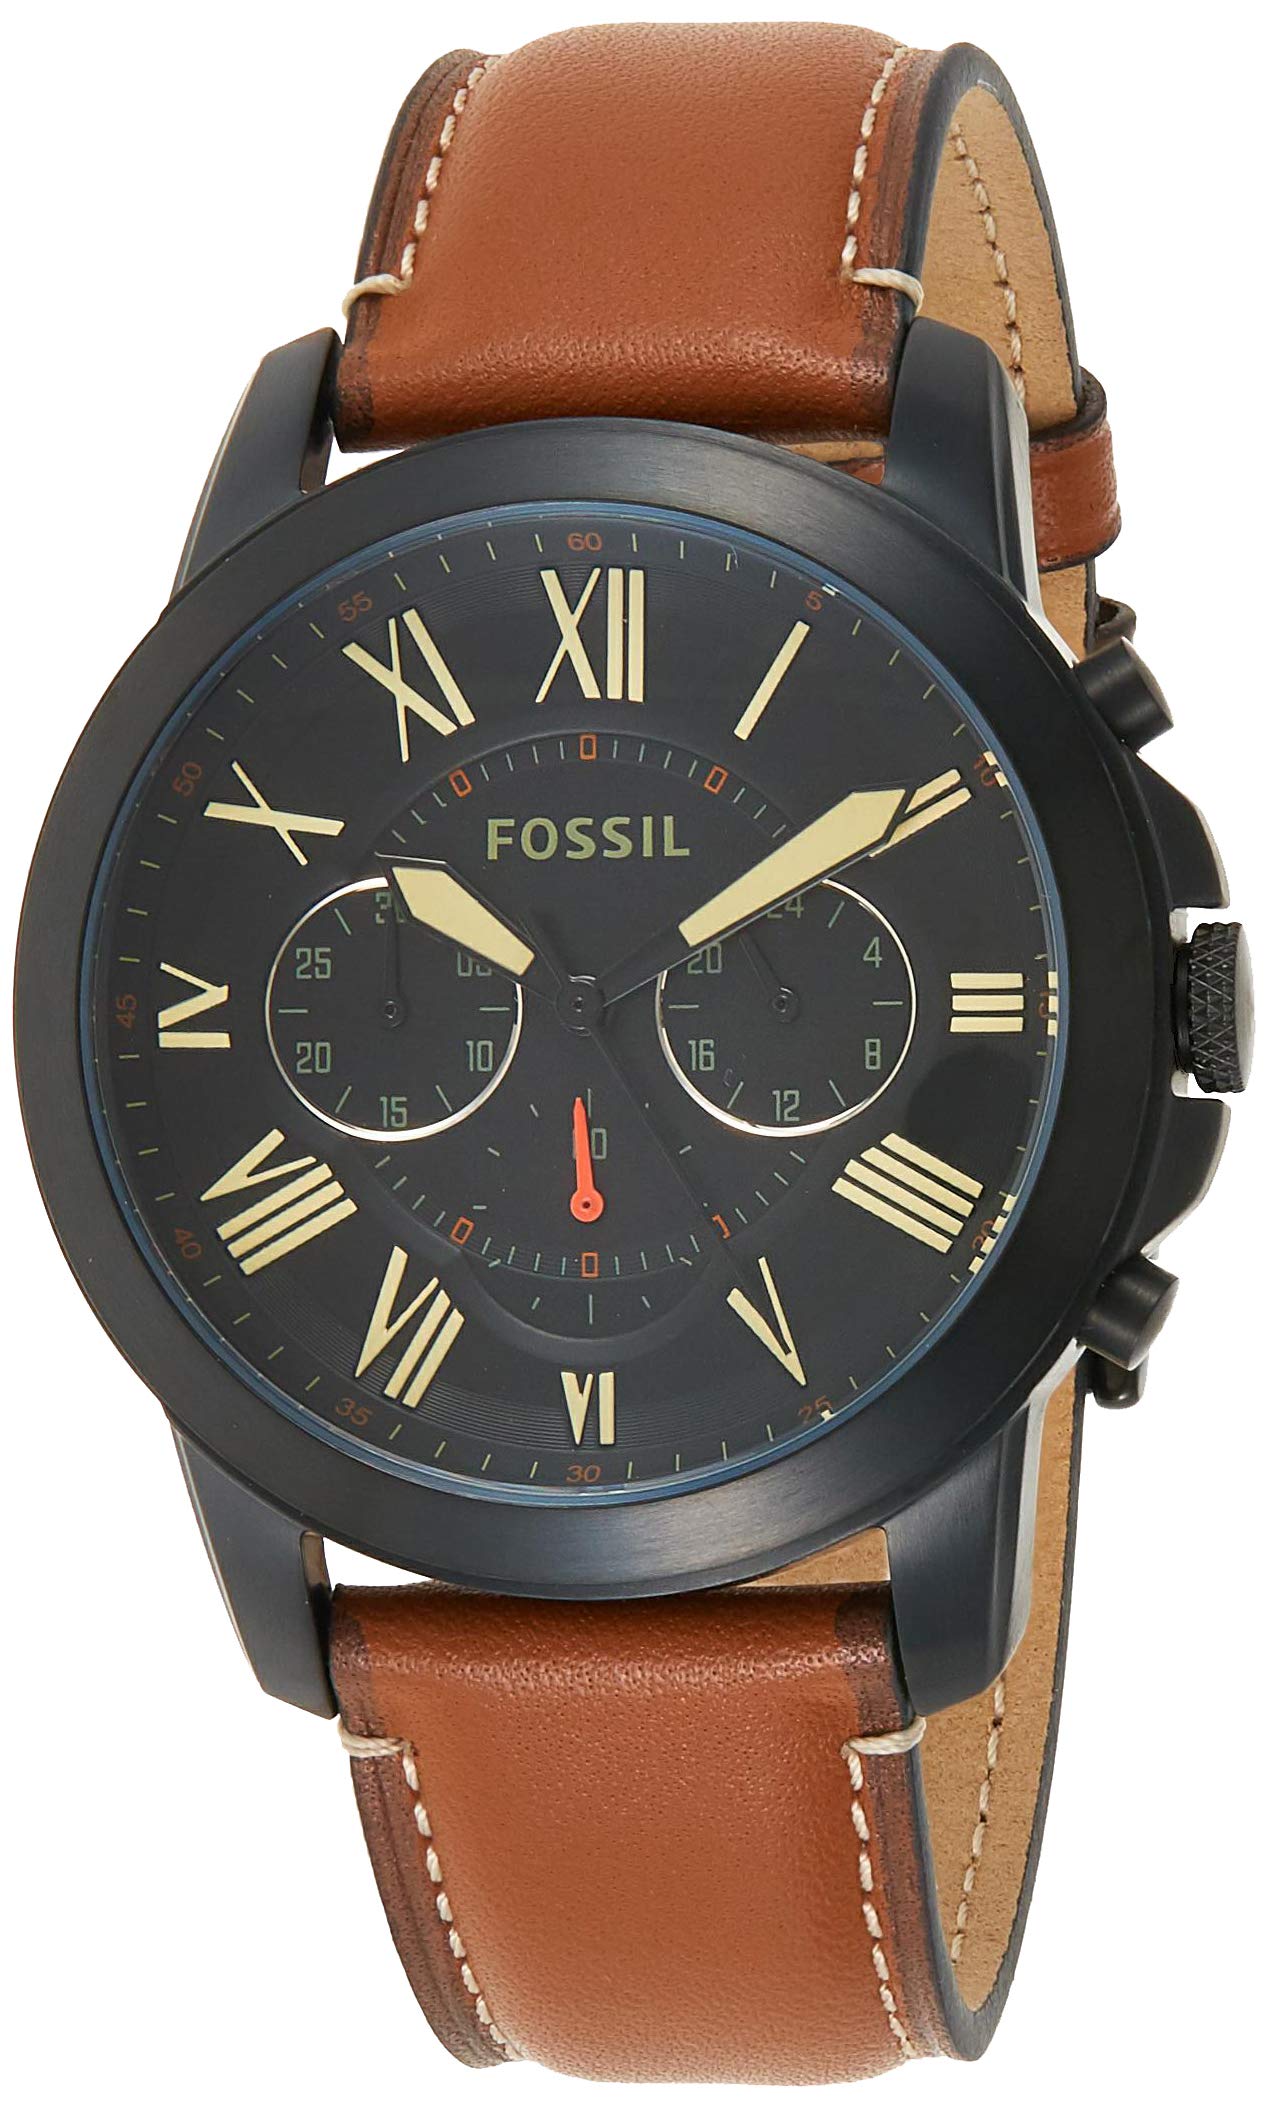 Fossil Men's Grant Quartz Leather Chronograph Watch, Color: Black, Brown (Model: FS5241)